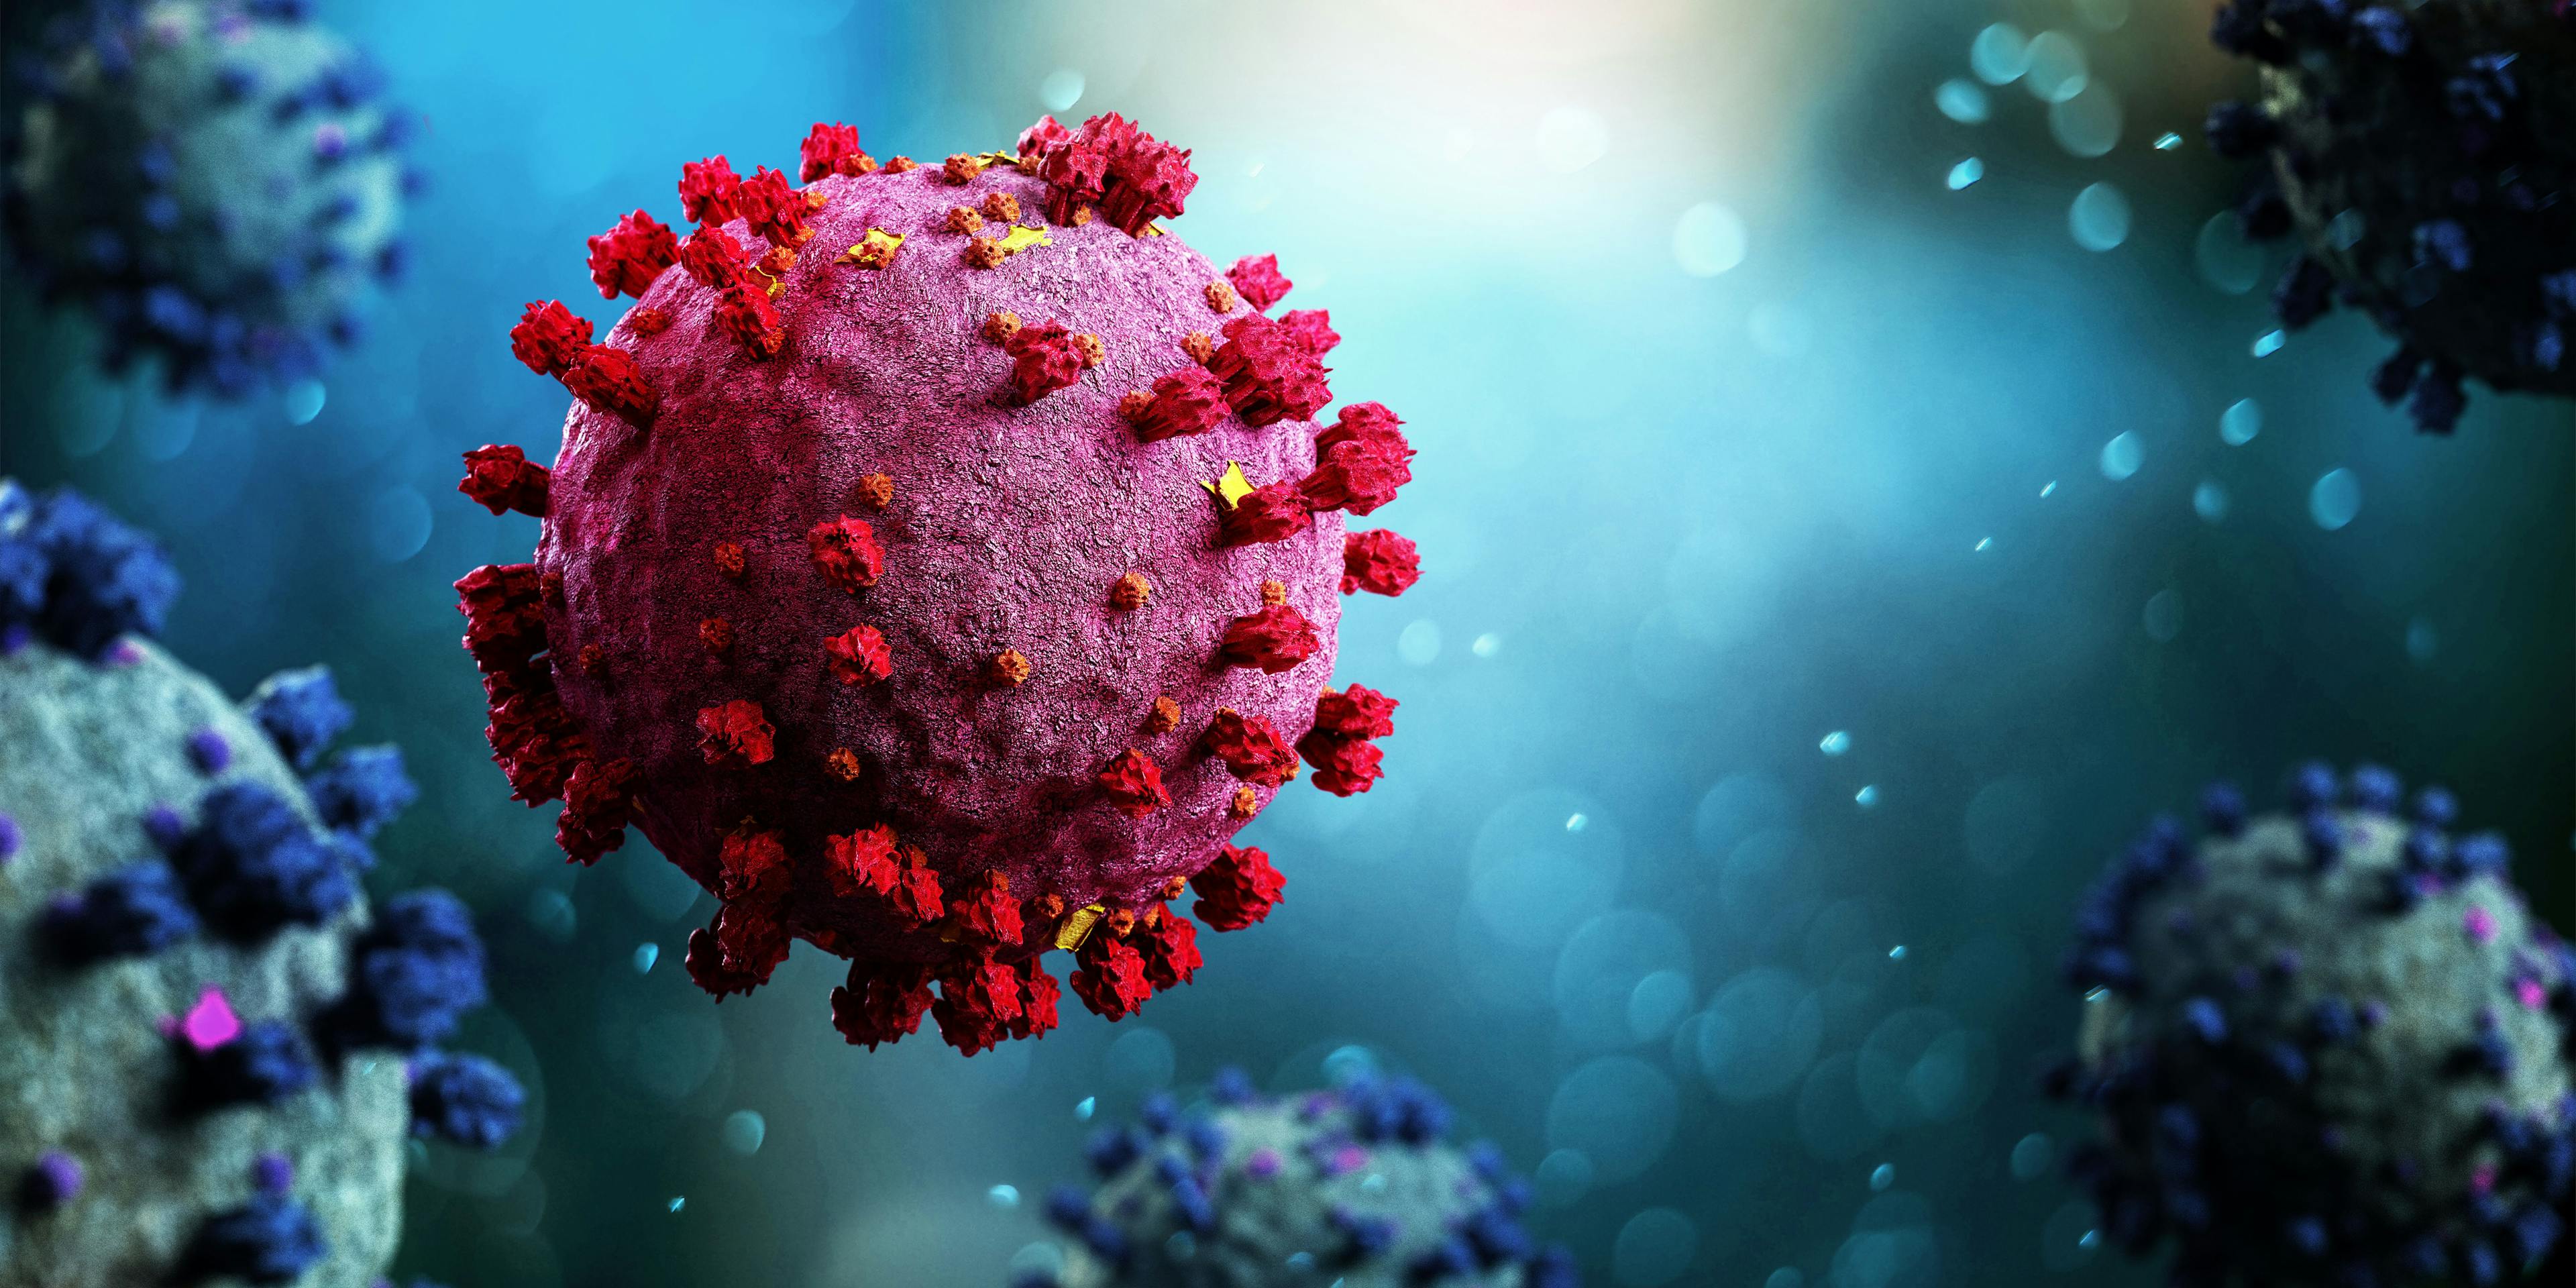 Coronavirus Covid-19 background - 3d rendering- Image credit: Production Perig | stock.adobe.com